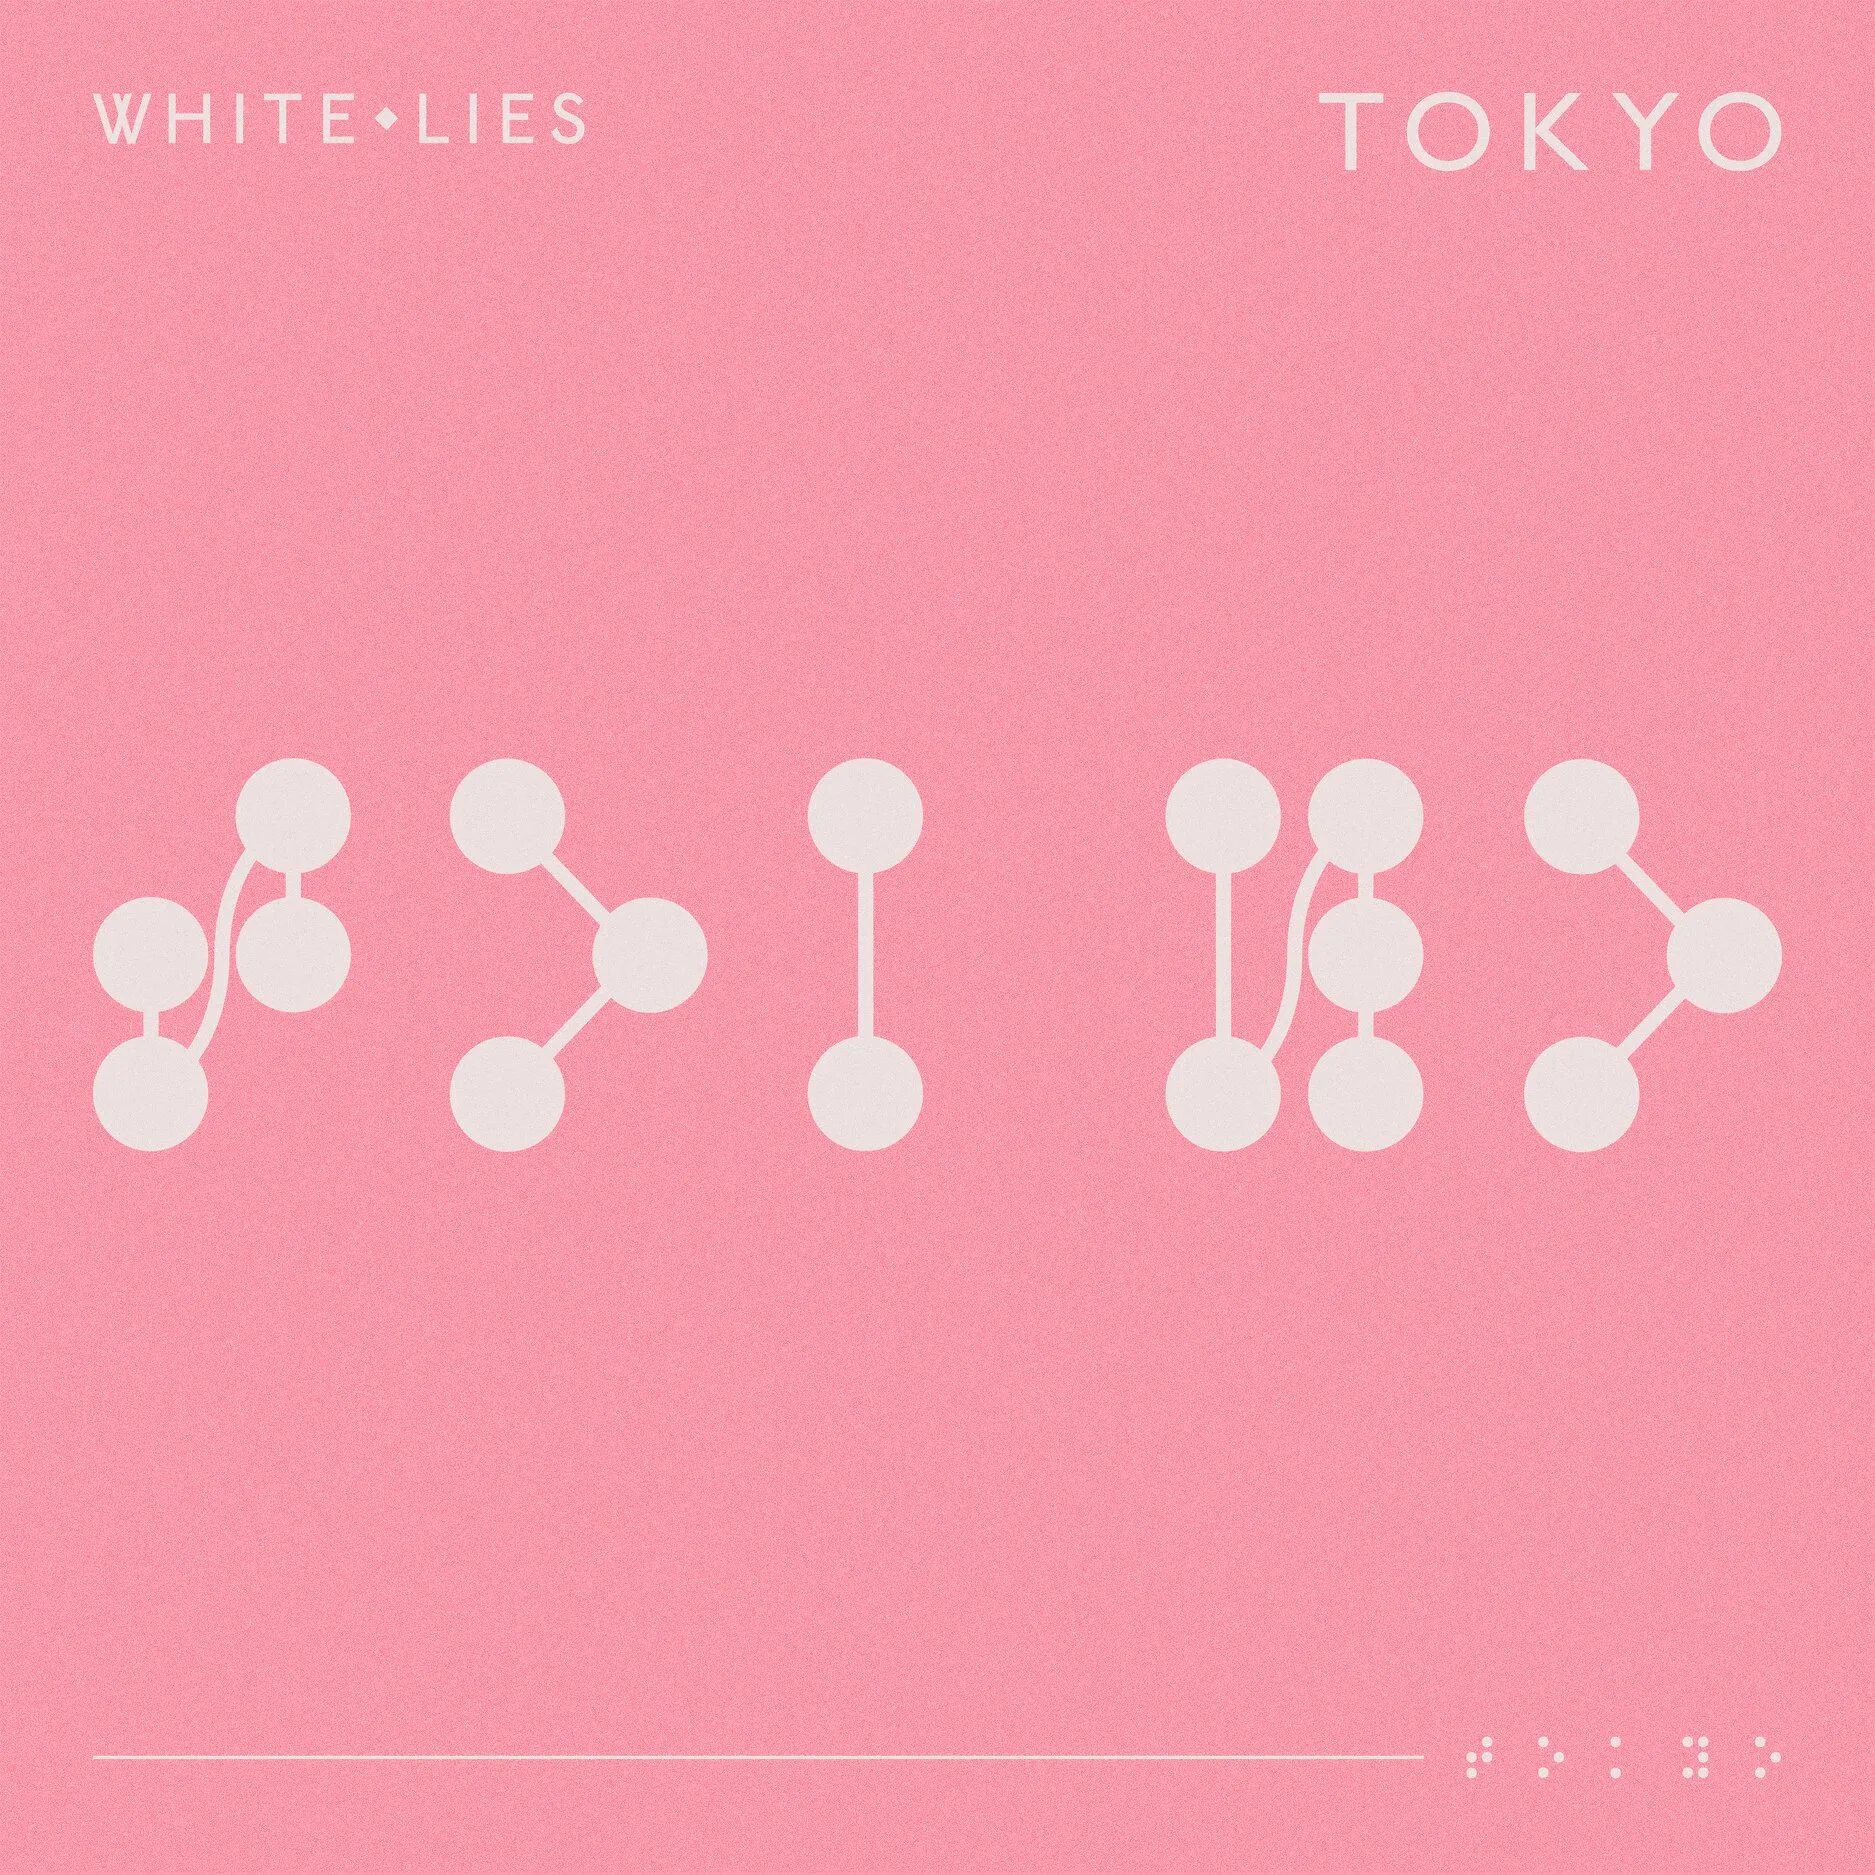 Tokyo White Lies. White Lies Five. White Lies album. White Lies Cover Five.